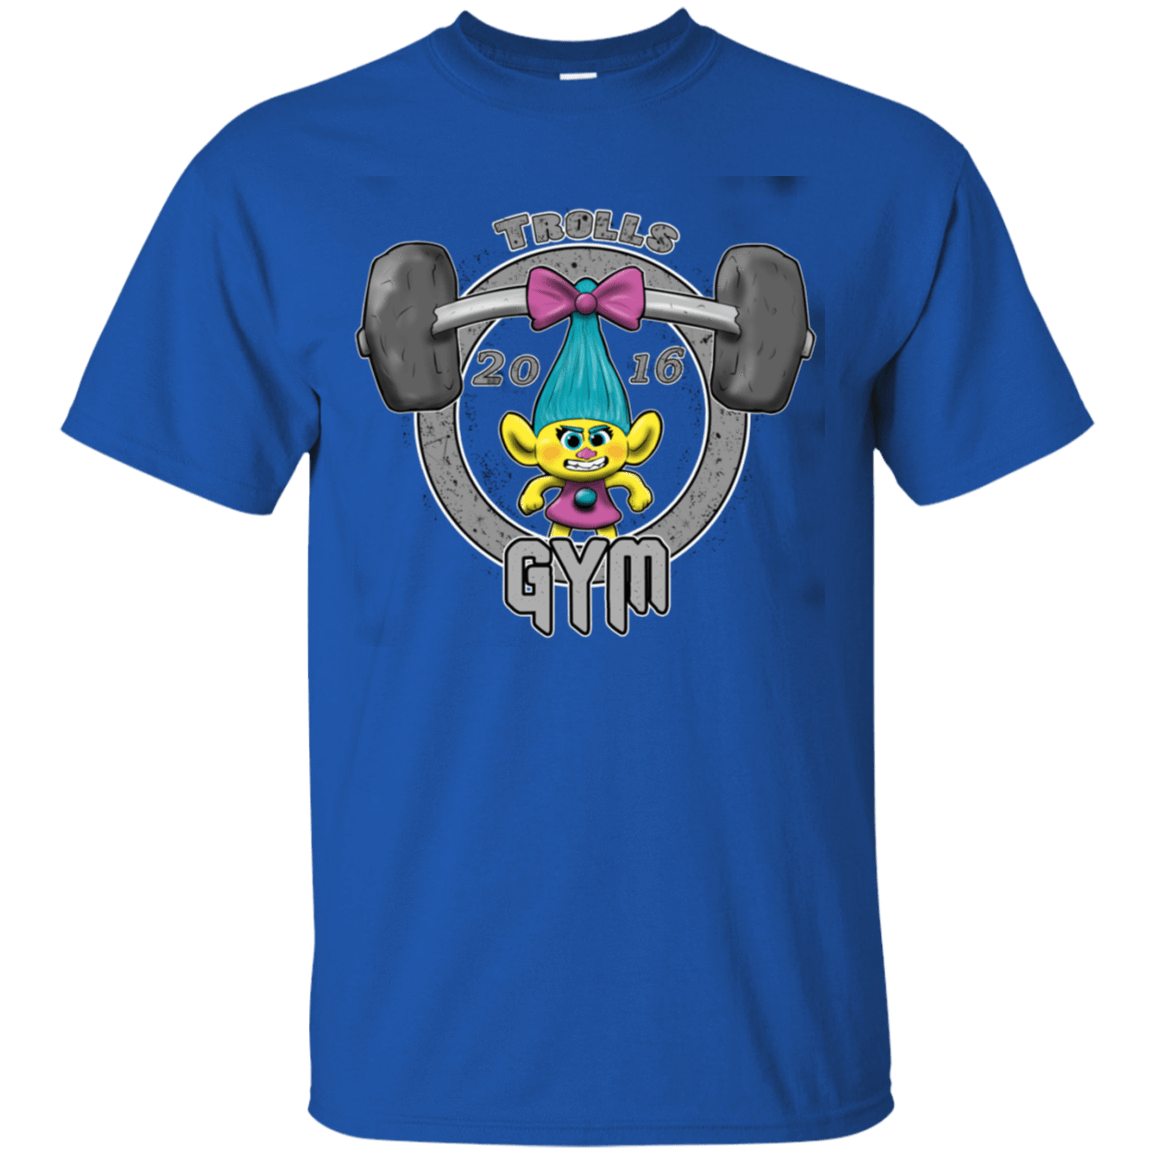 Gym T Shirts, Pop Up Tee